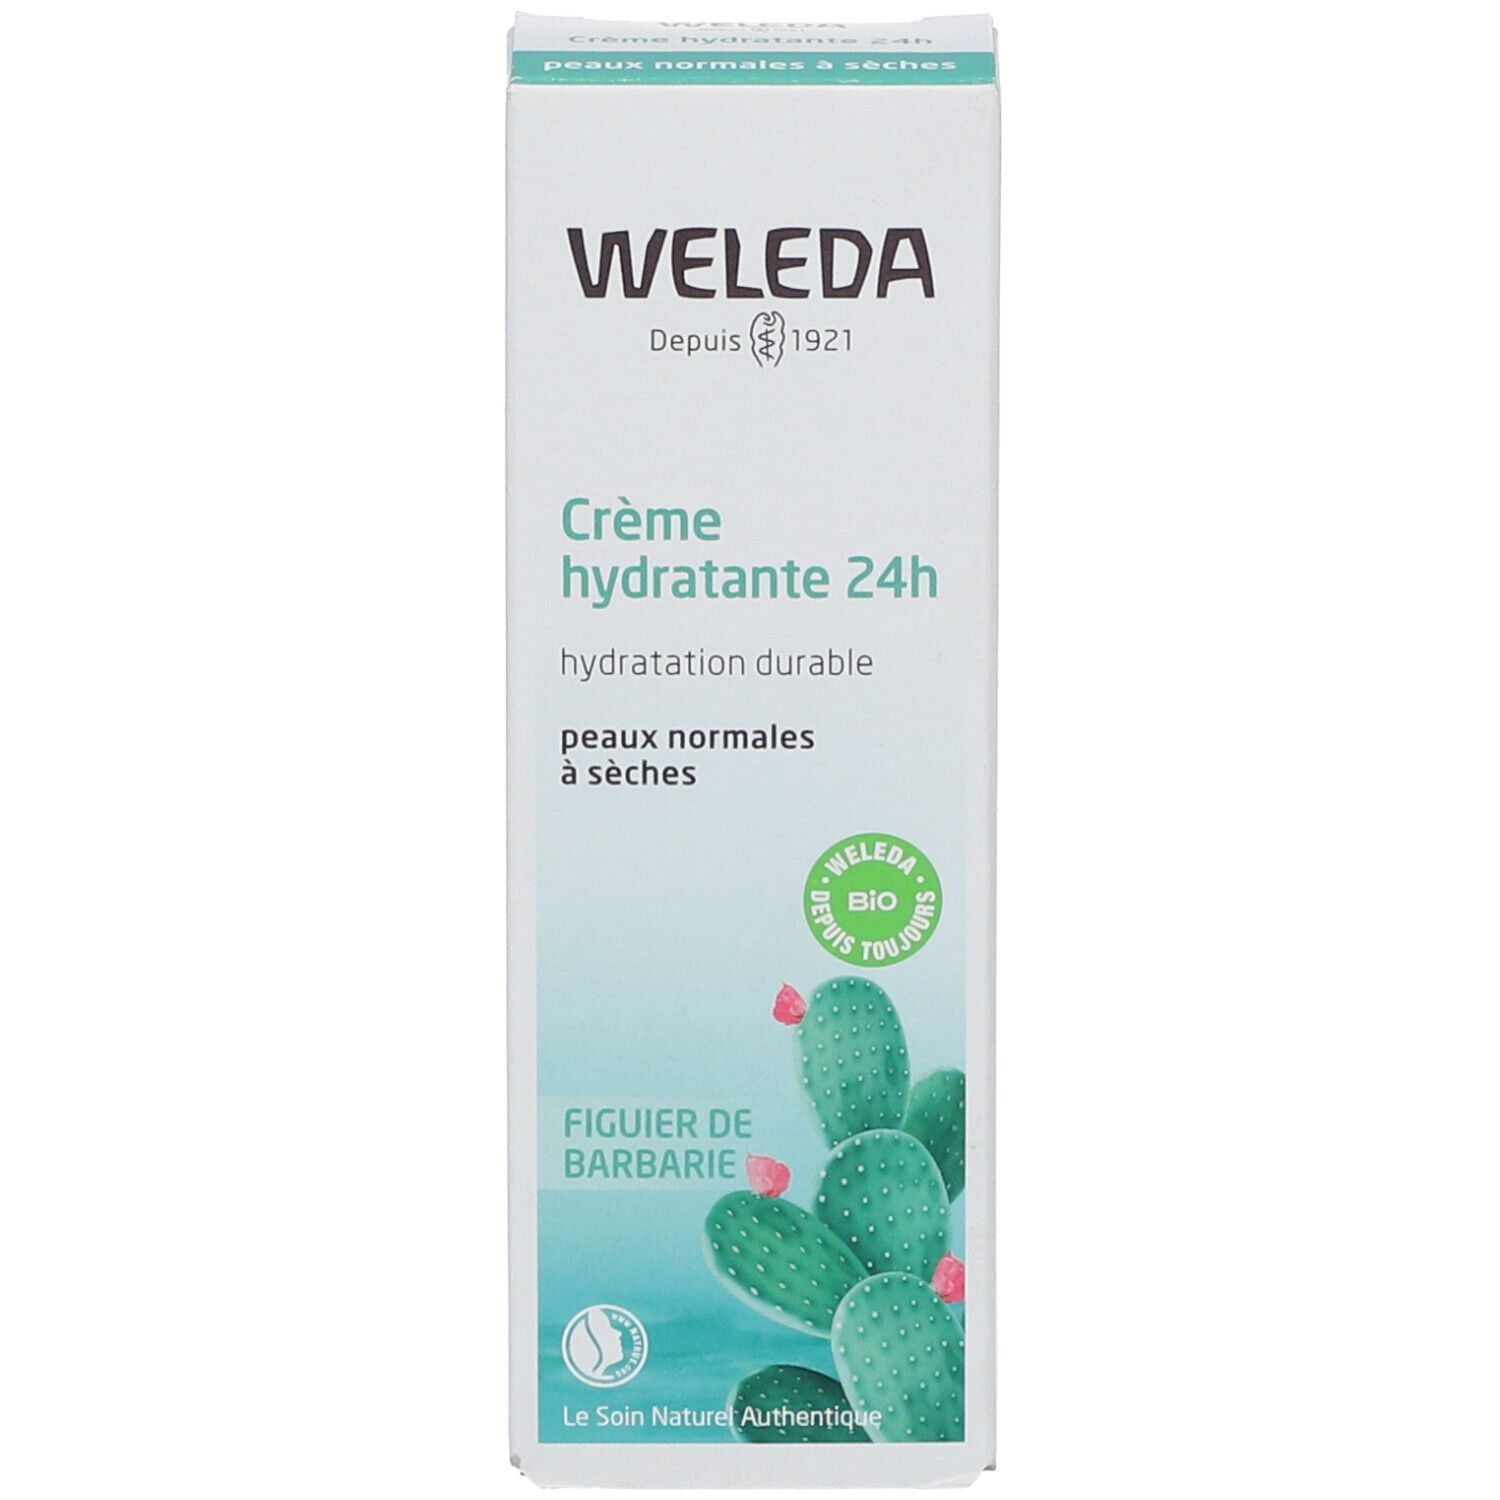 Crème hydratante 24H au Figuier de Barbarie - Weleda